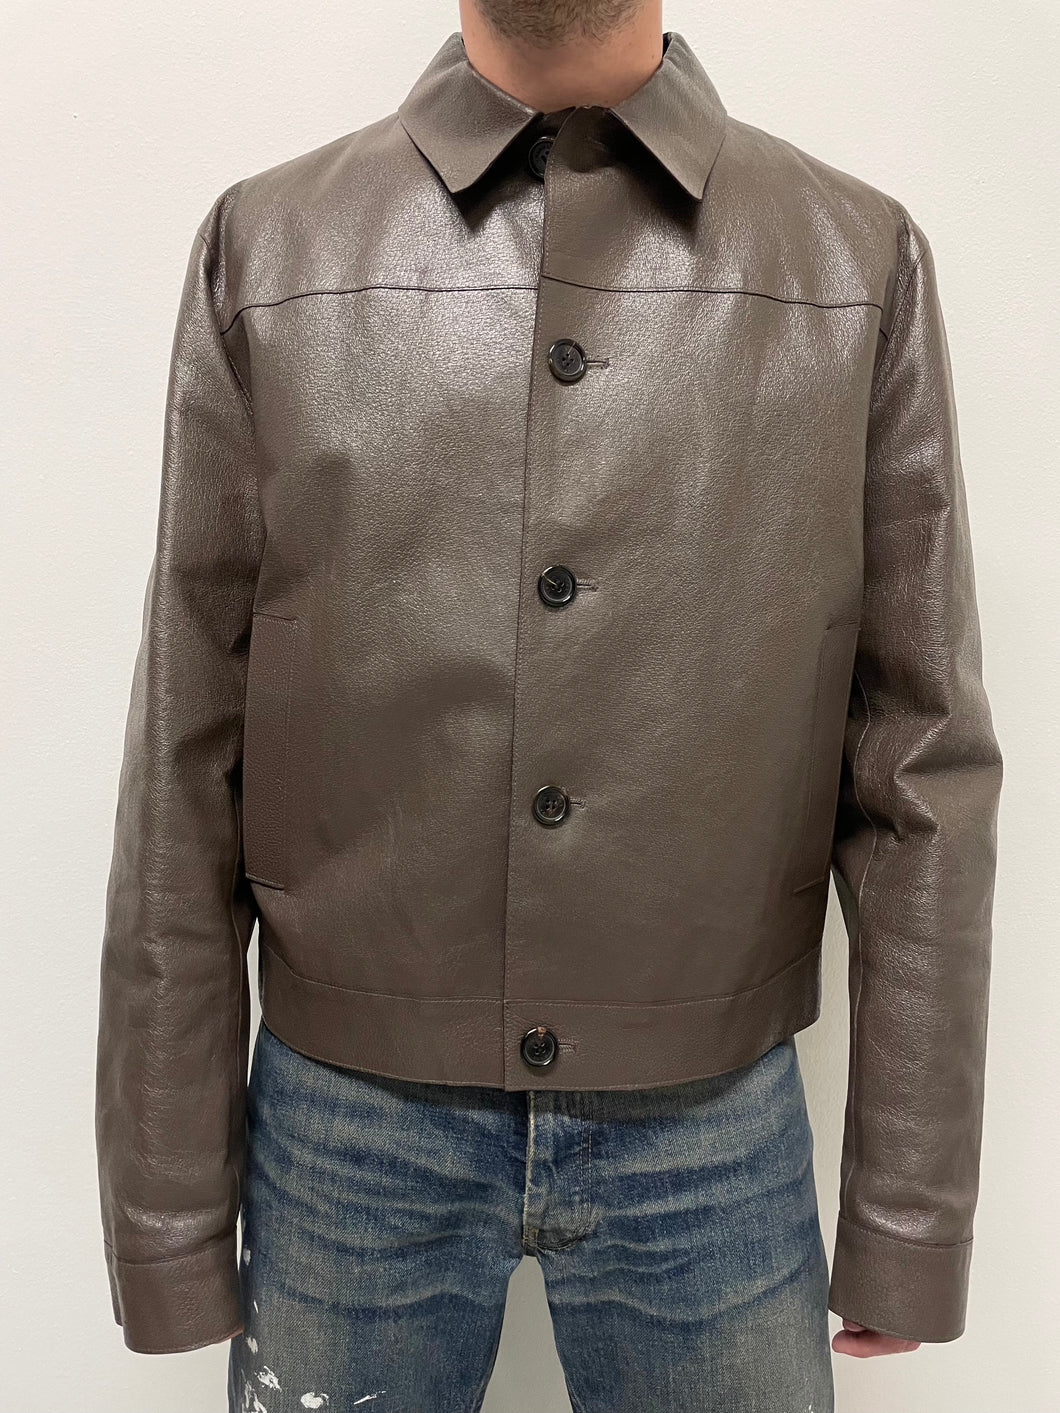 2010s Prada leather jacket